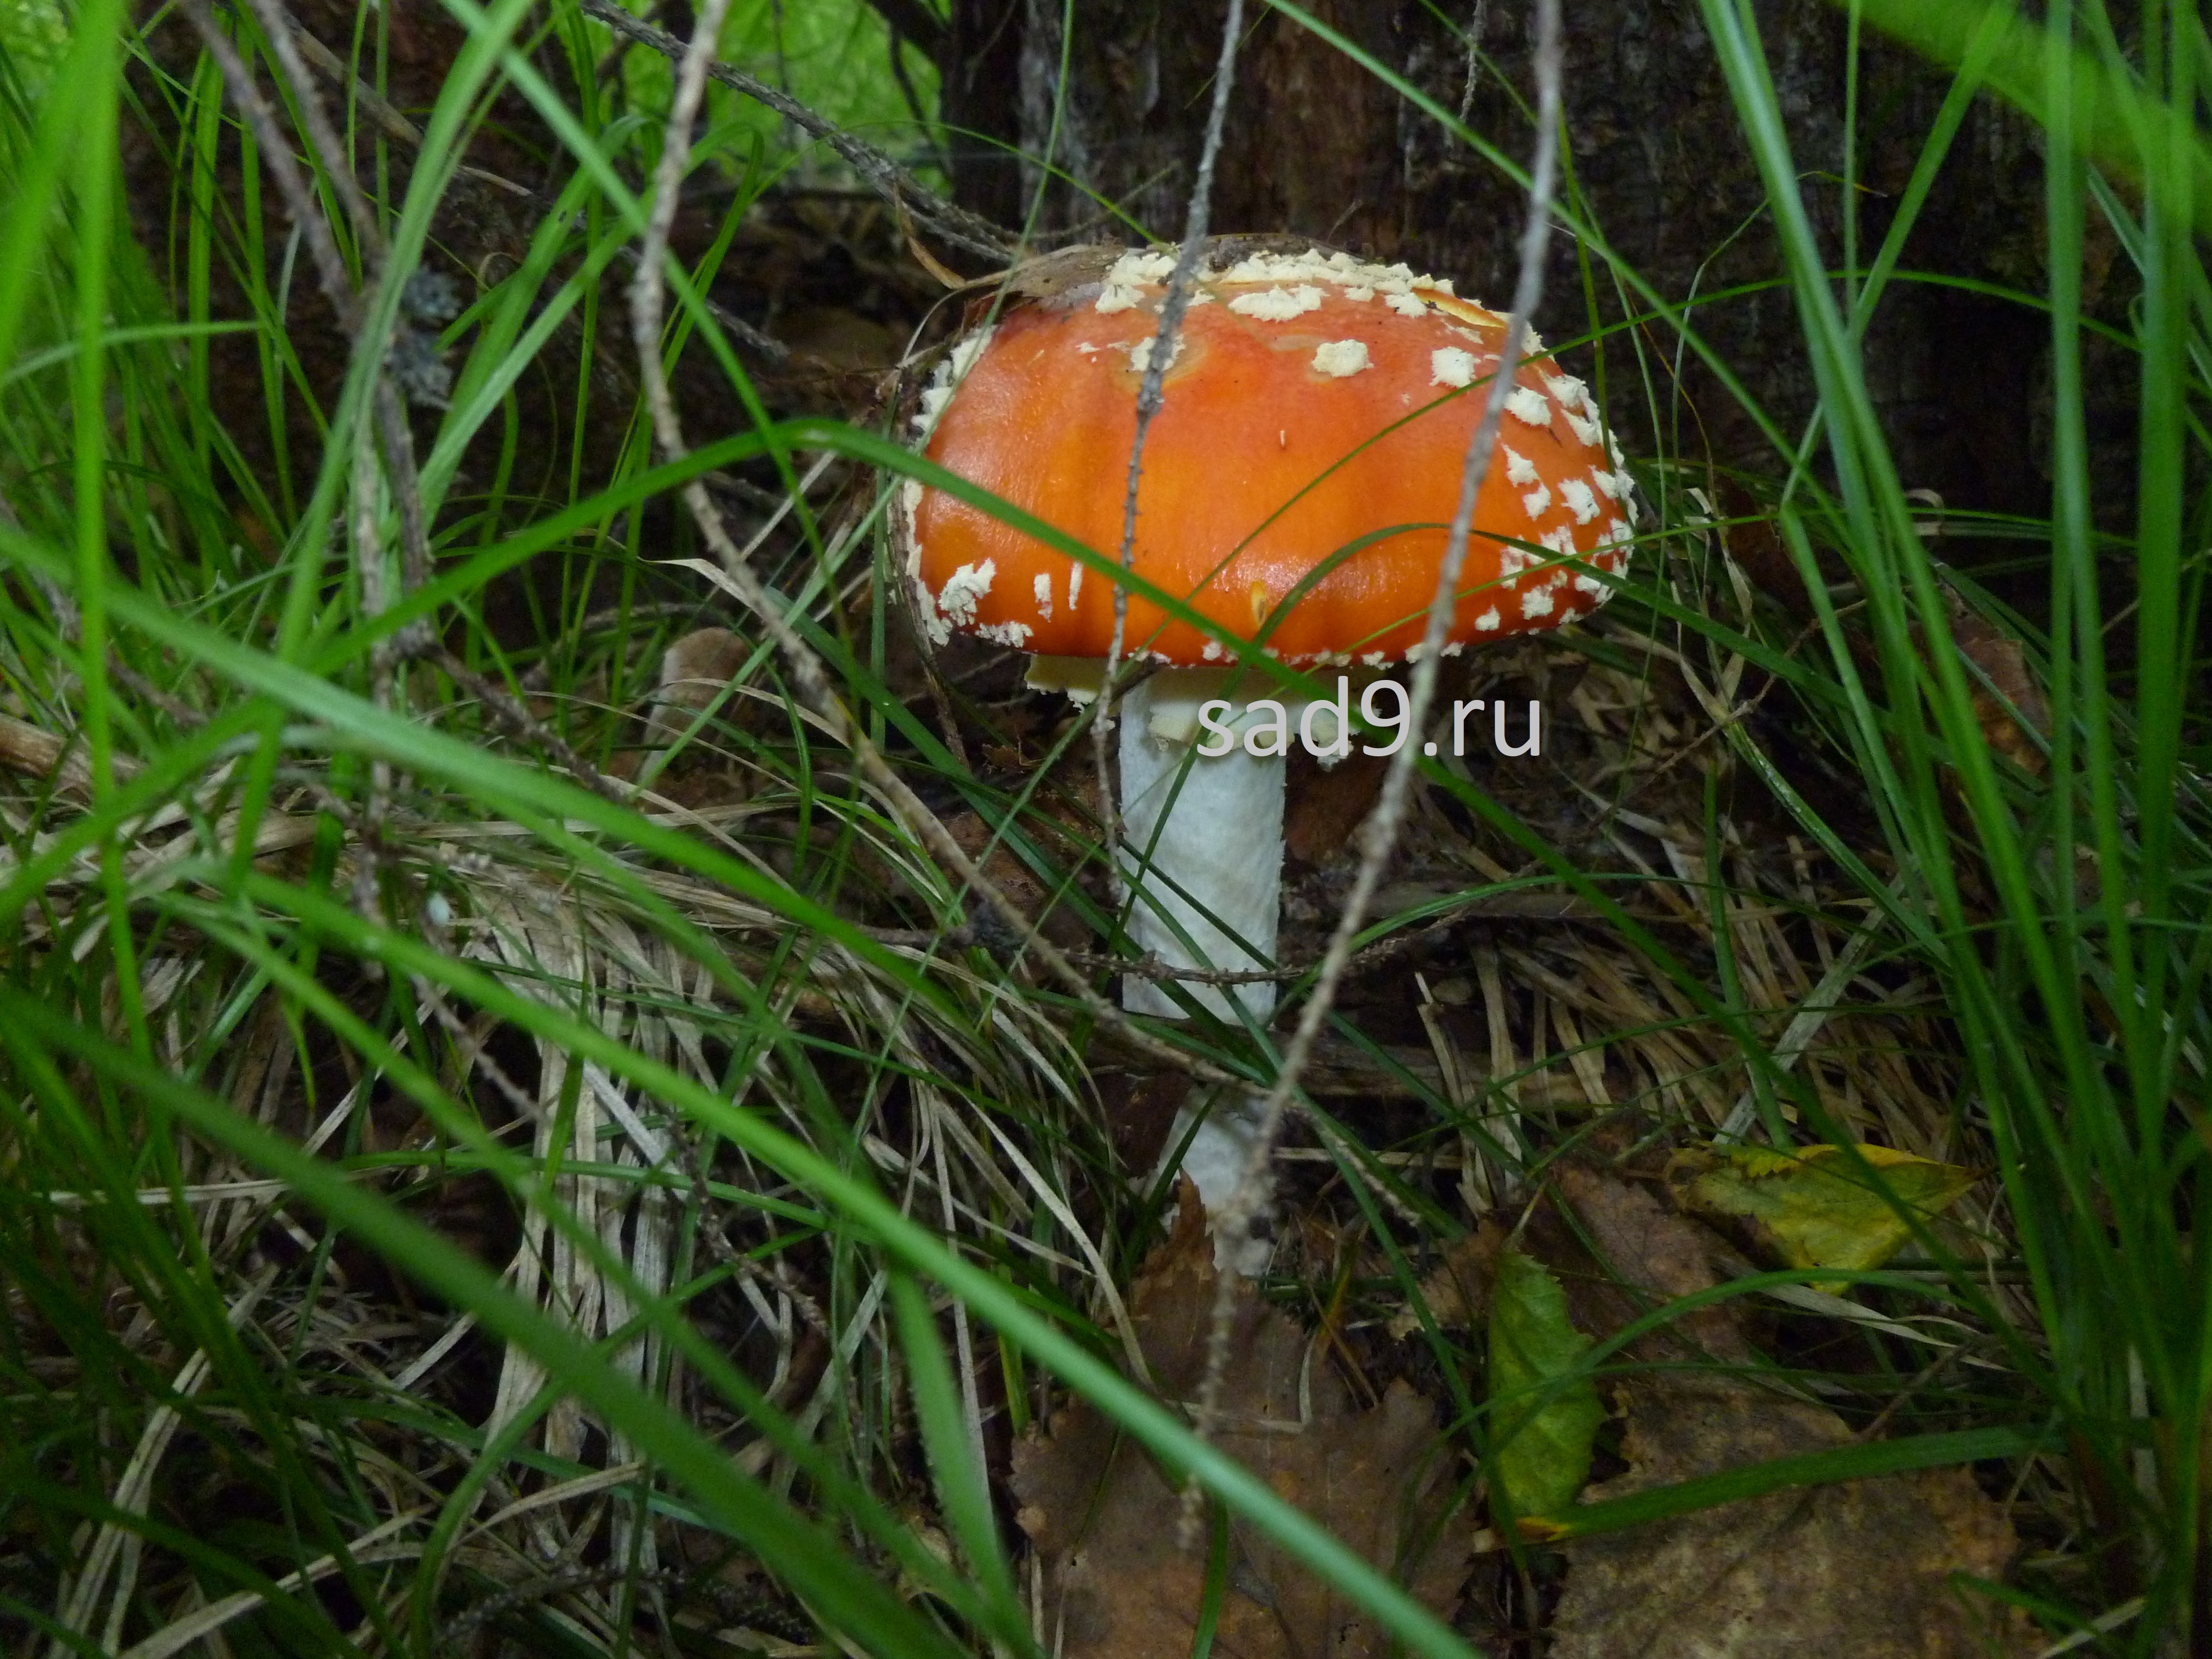 Красивое фото ядовитого гриба - мухомора